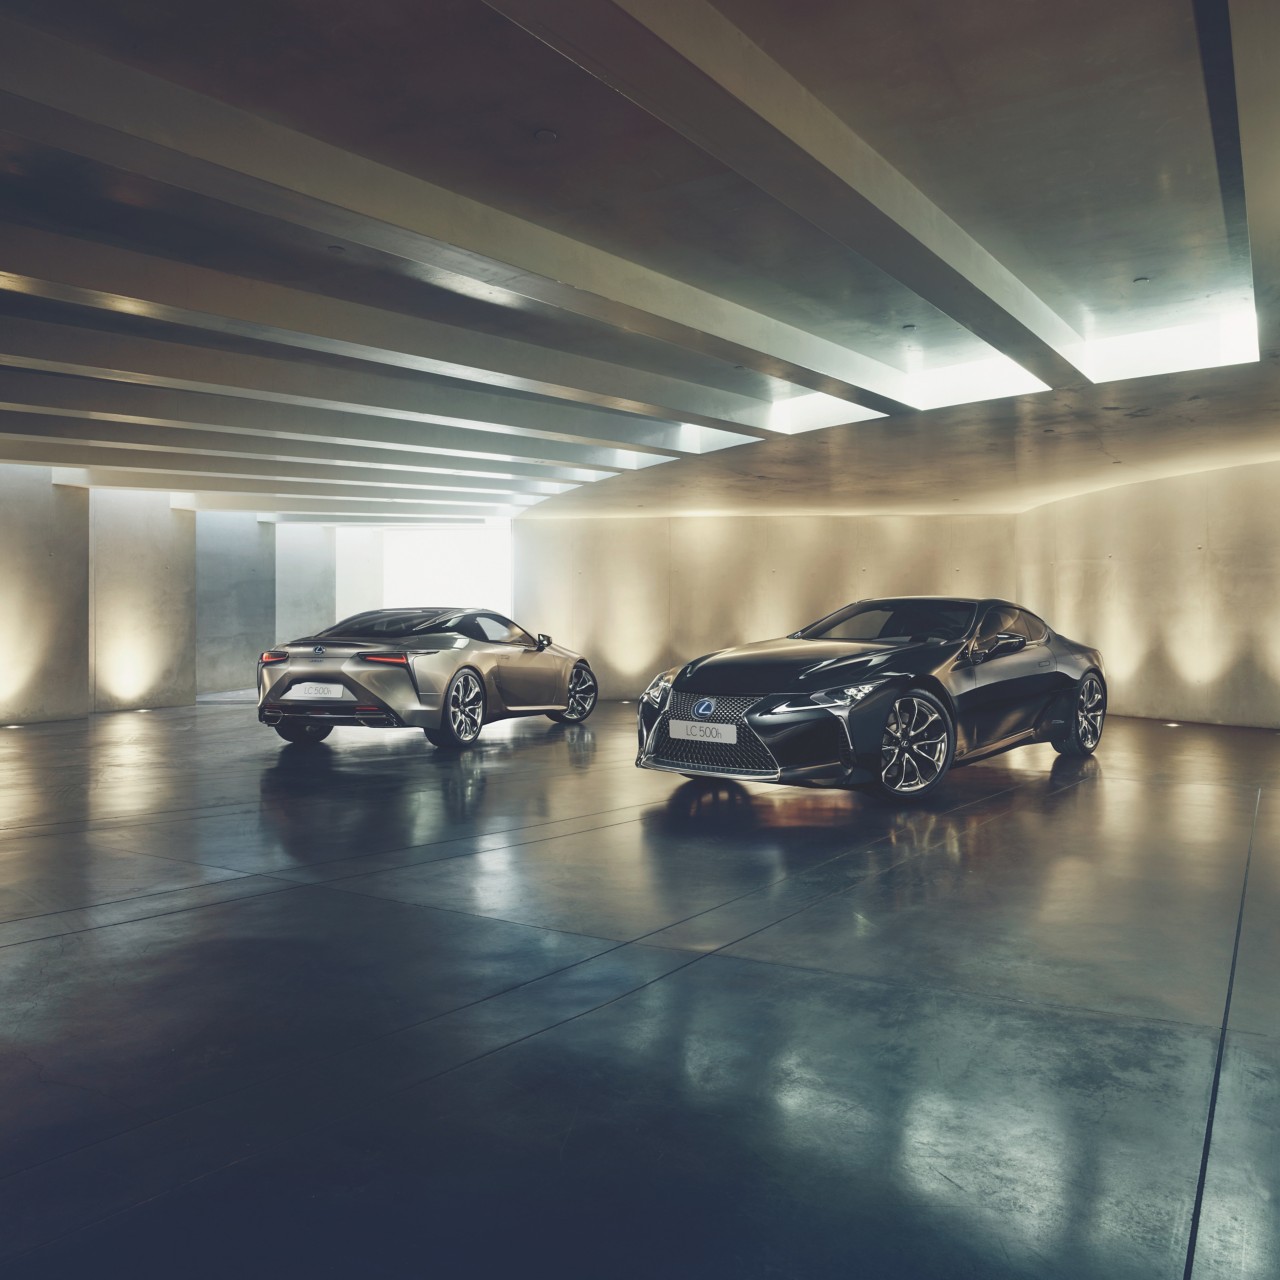 Lexus LC cars parked inside a building